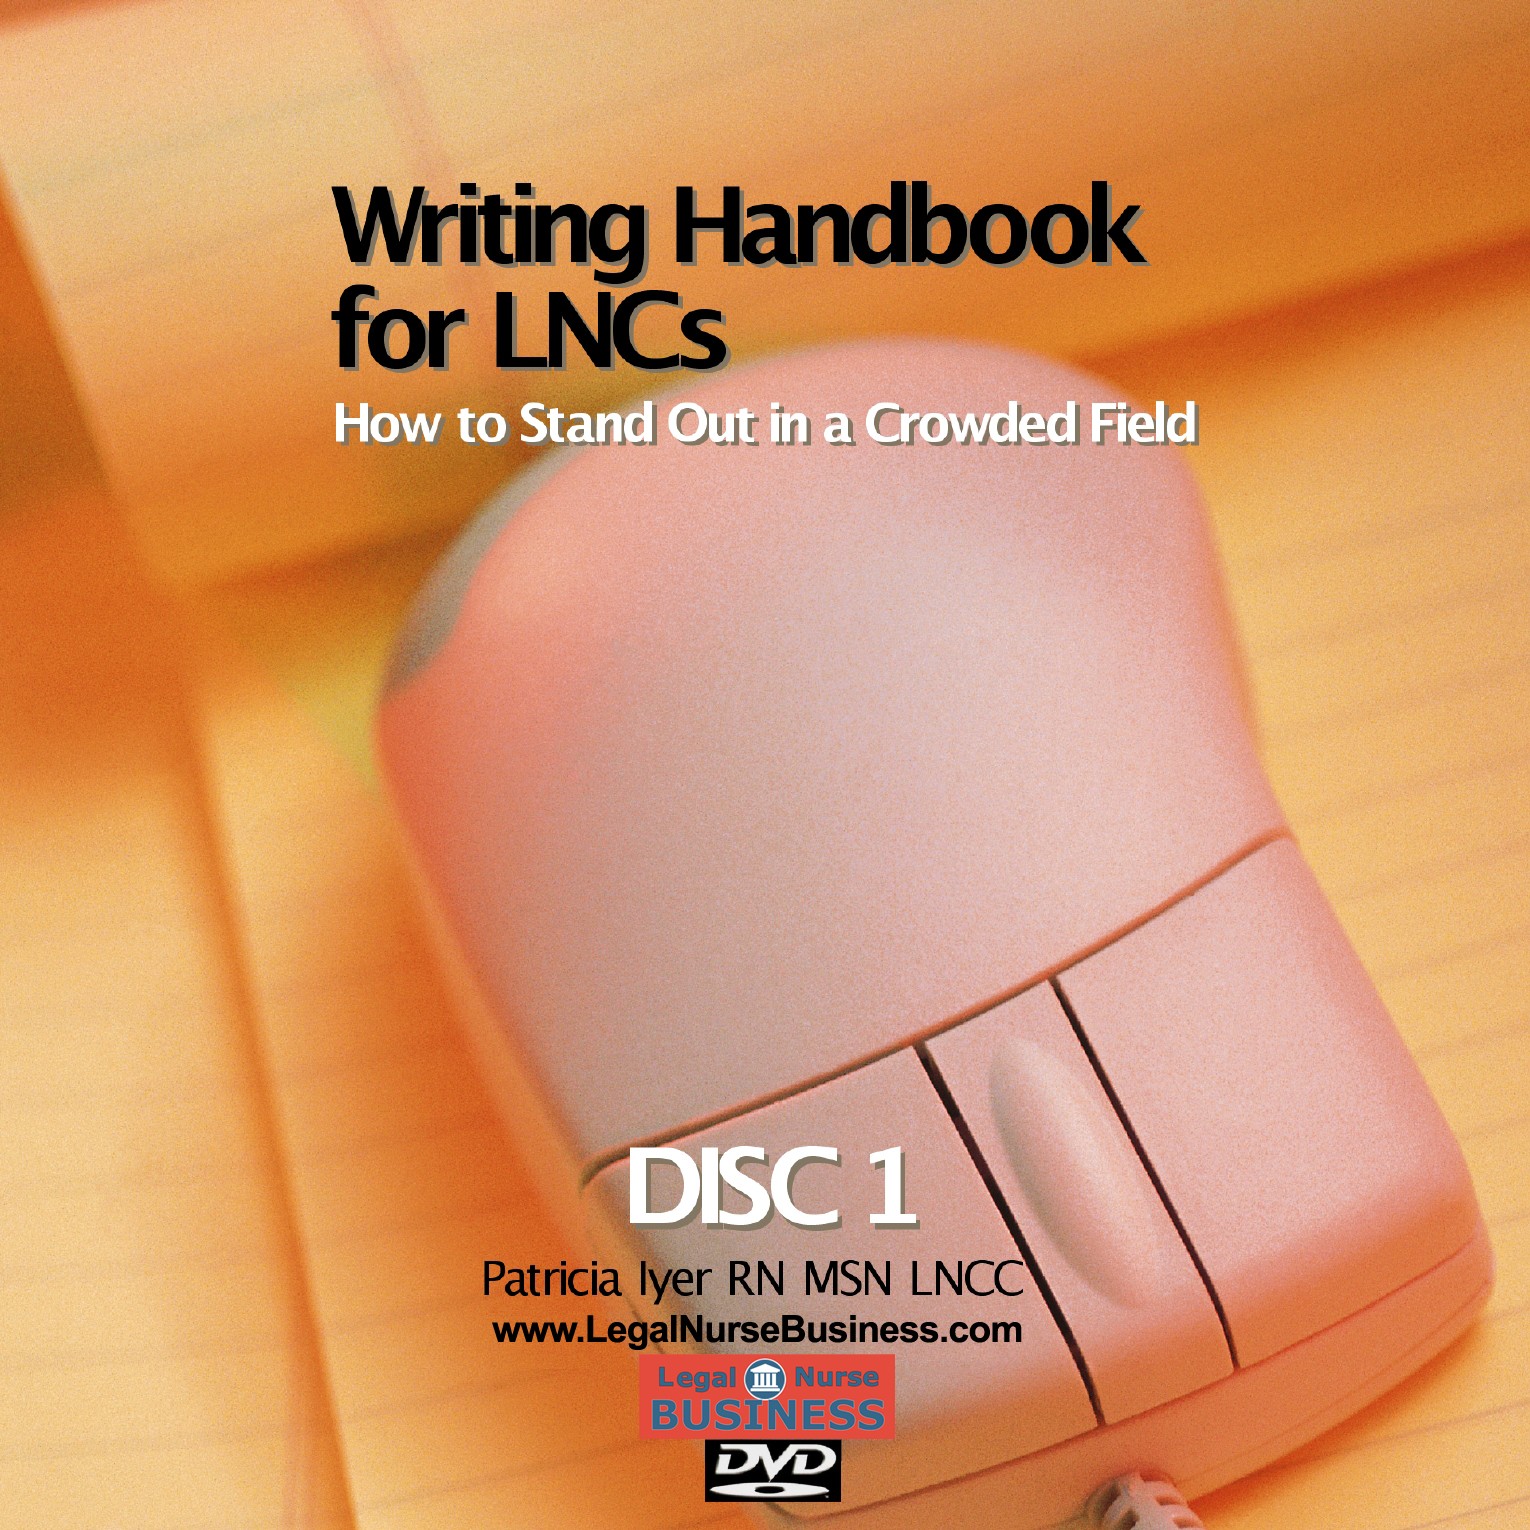 the creative writing handbook pdf